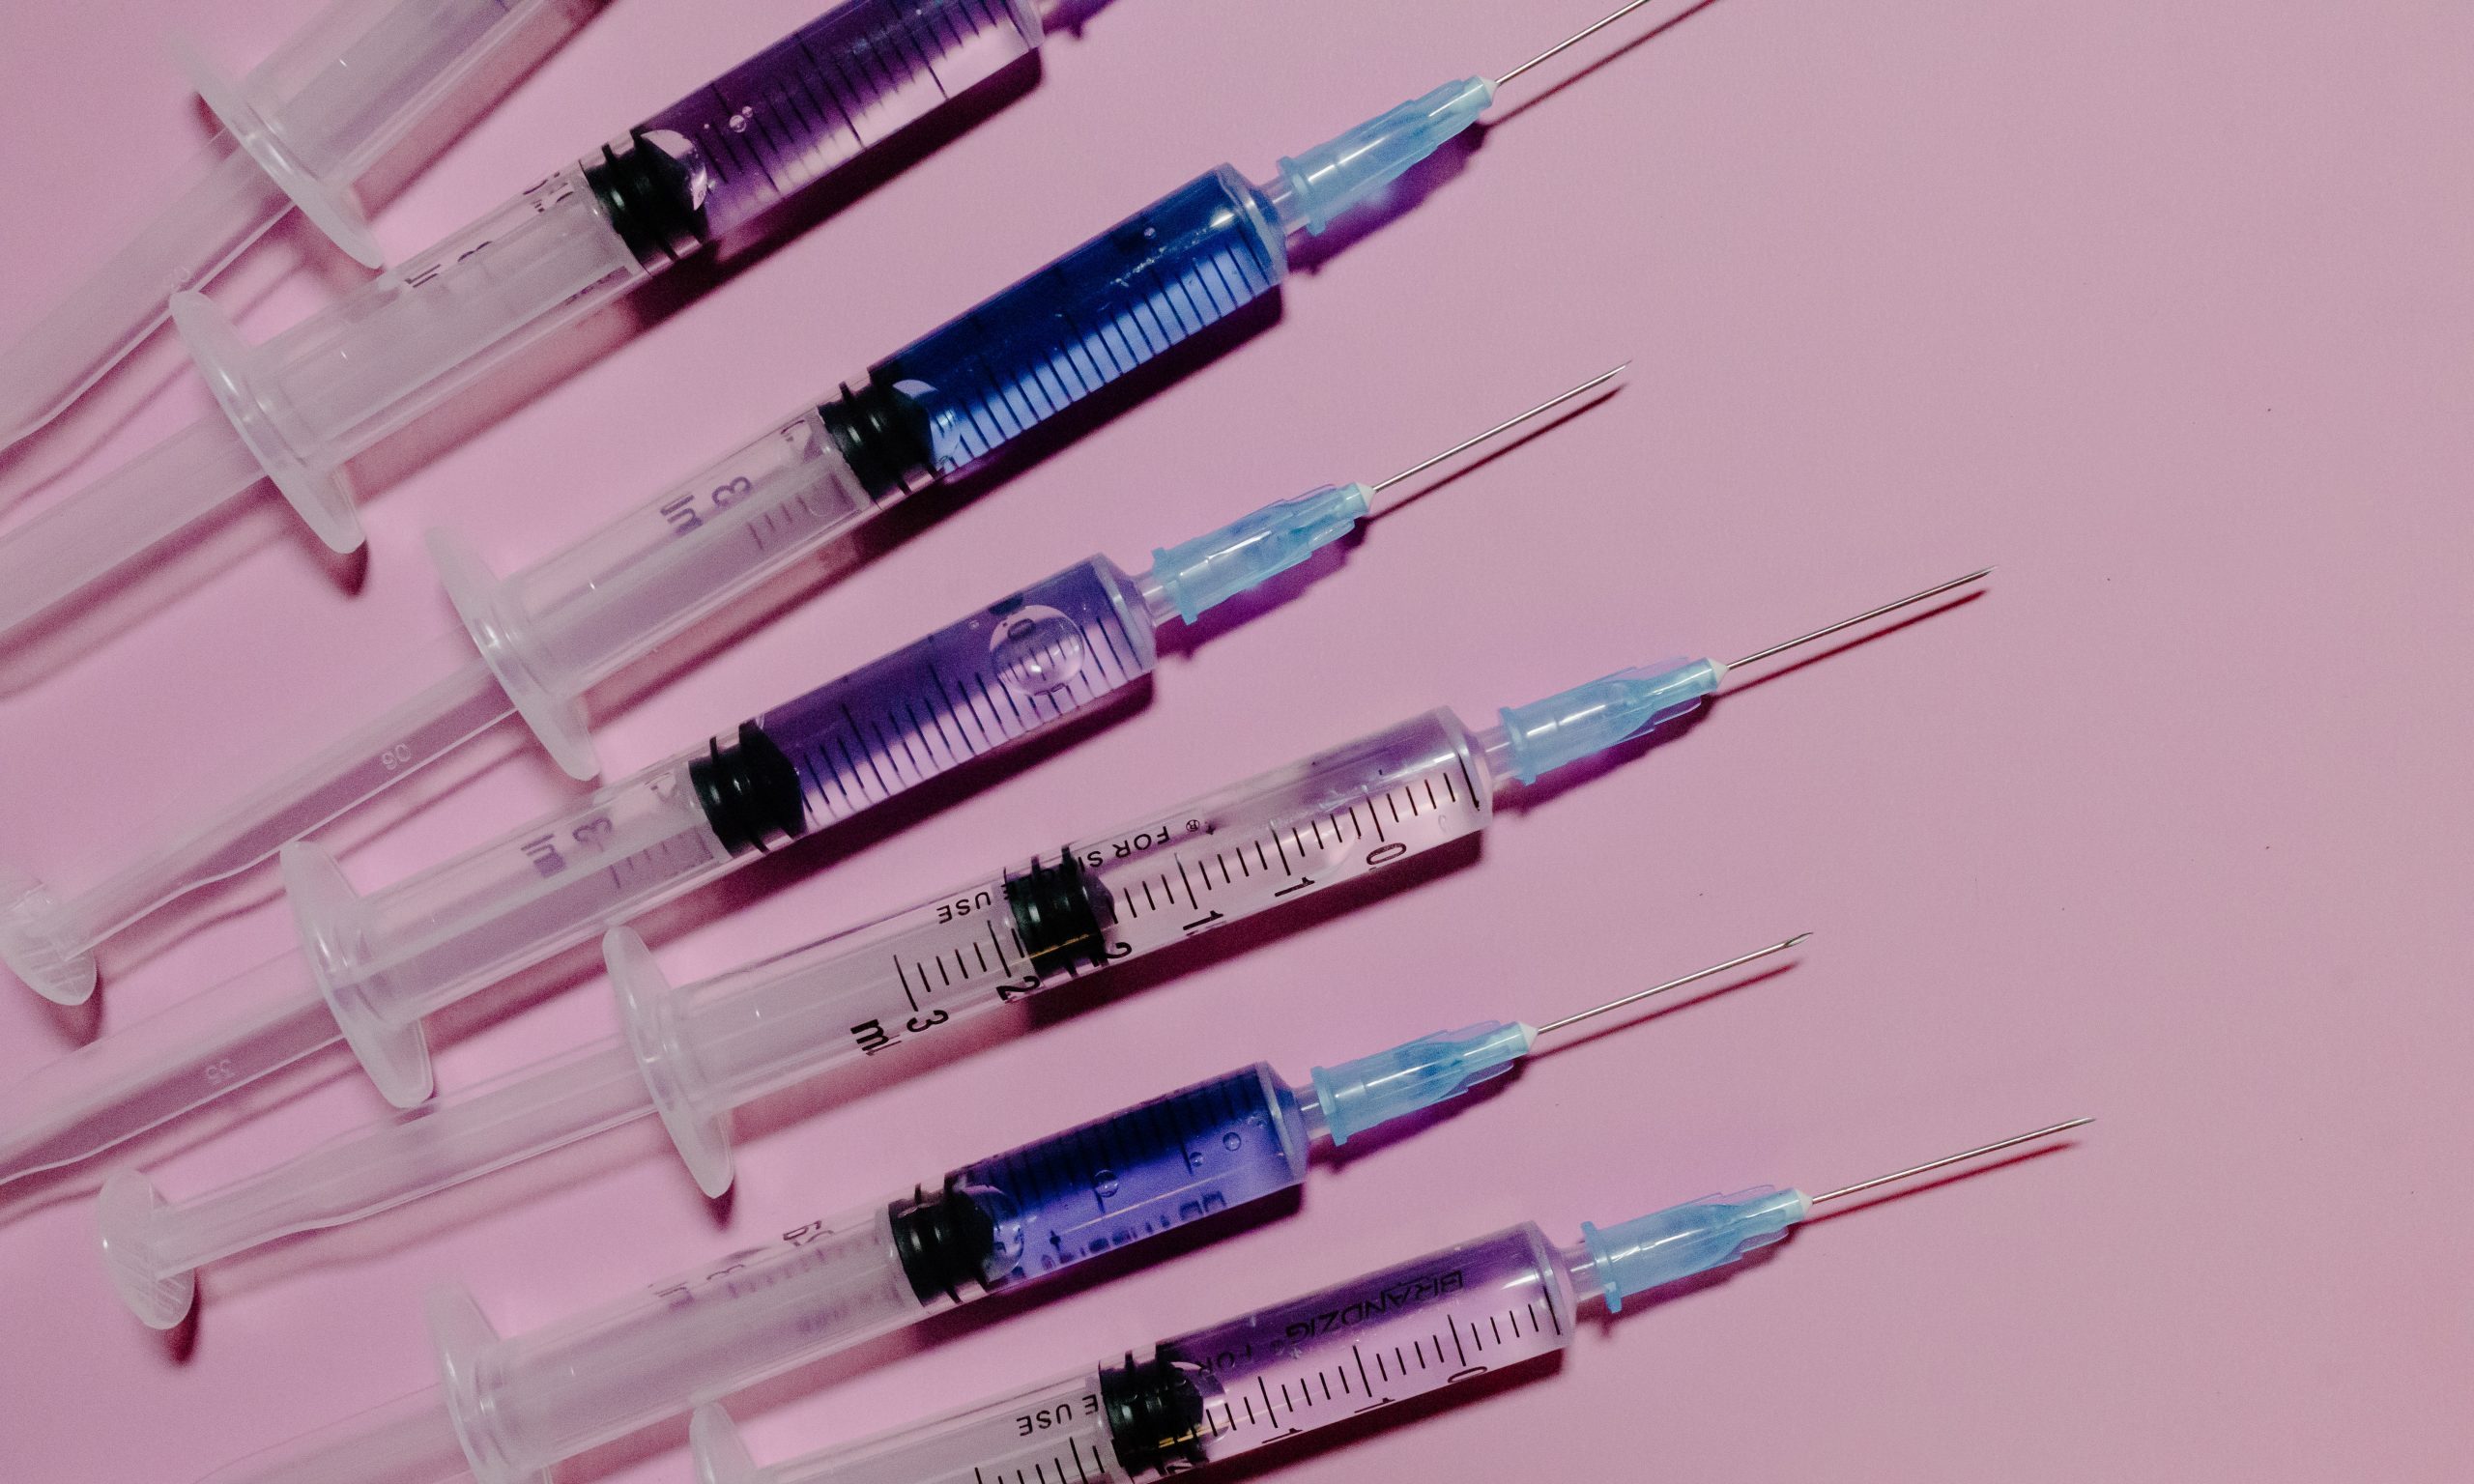 needles, vaccine, opioids